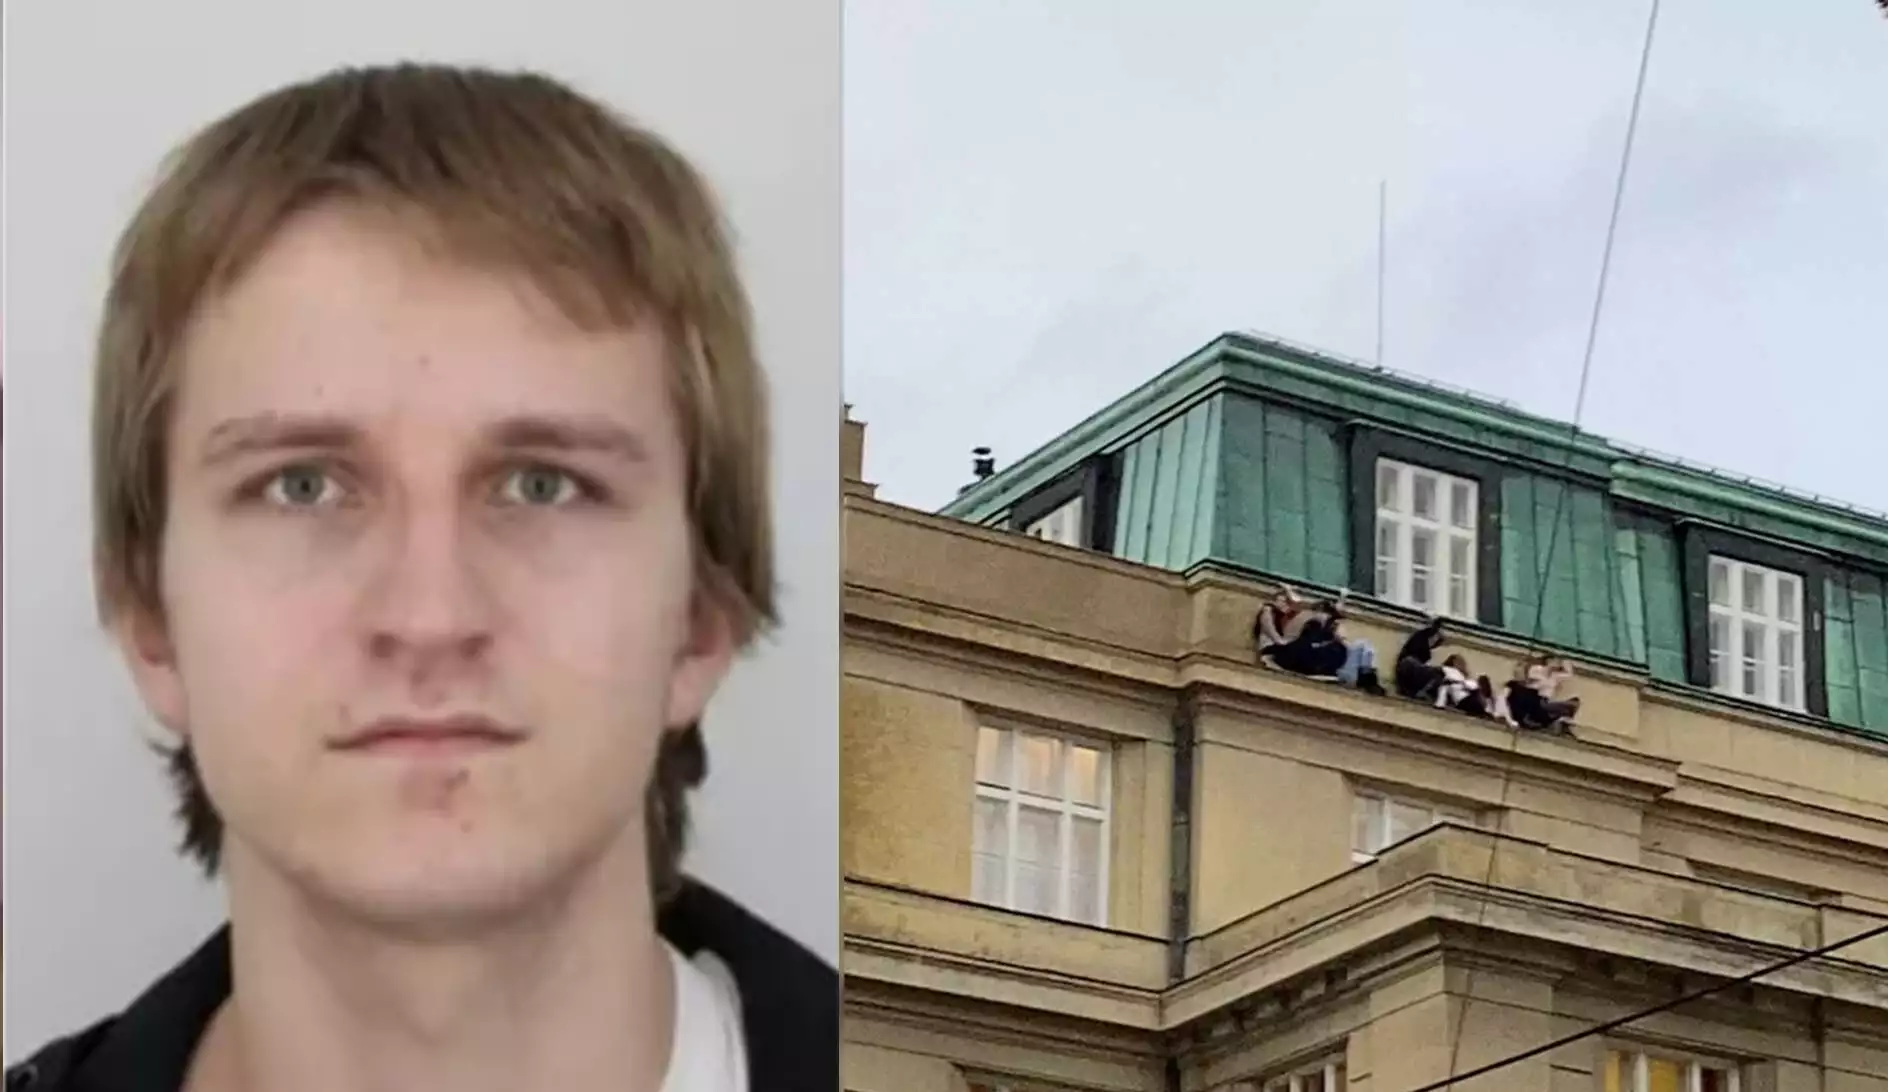 Mακελάρης της Πράγας: «Σπασίκλας» φοιτητής που μισούσε τους ανθρώπους – Αυτοσχέδια βόμβα στο κελάρι του σπιτιού του